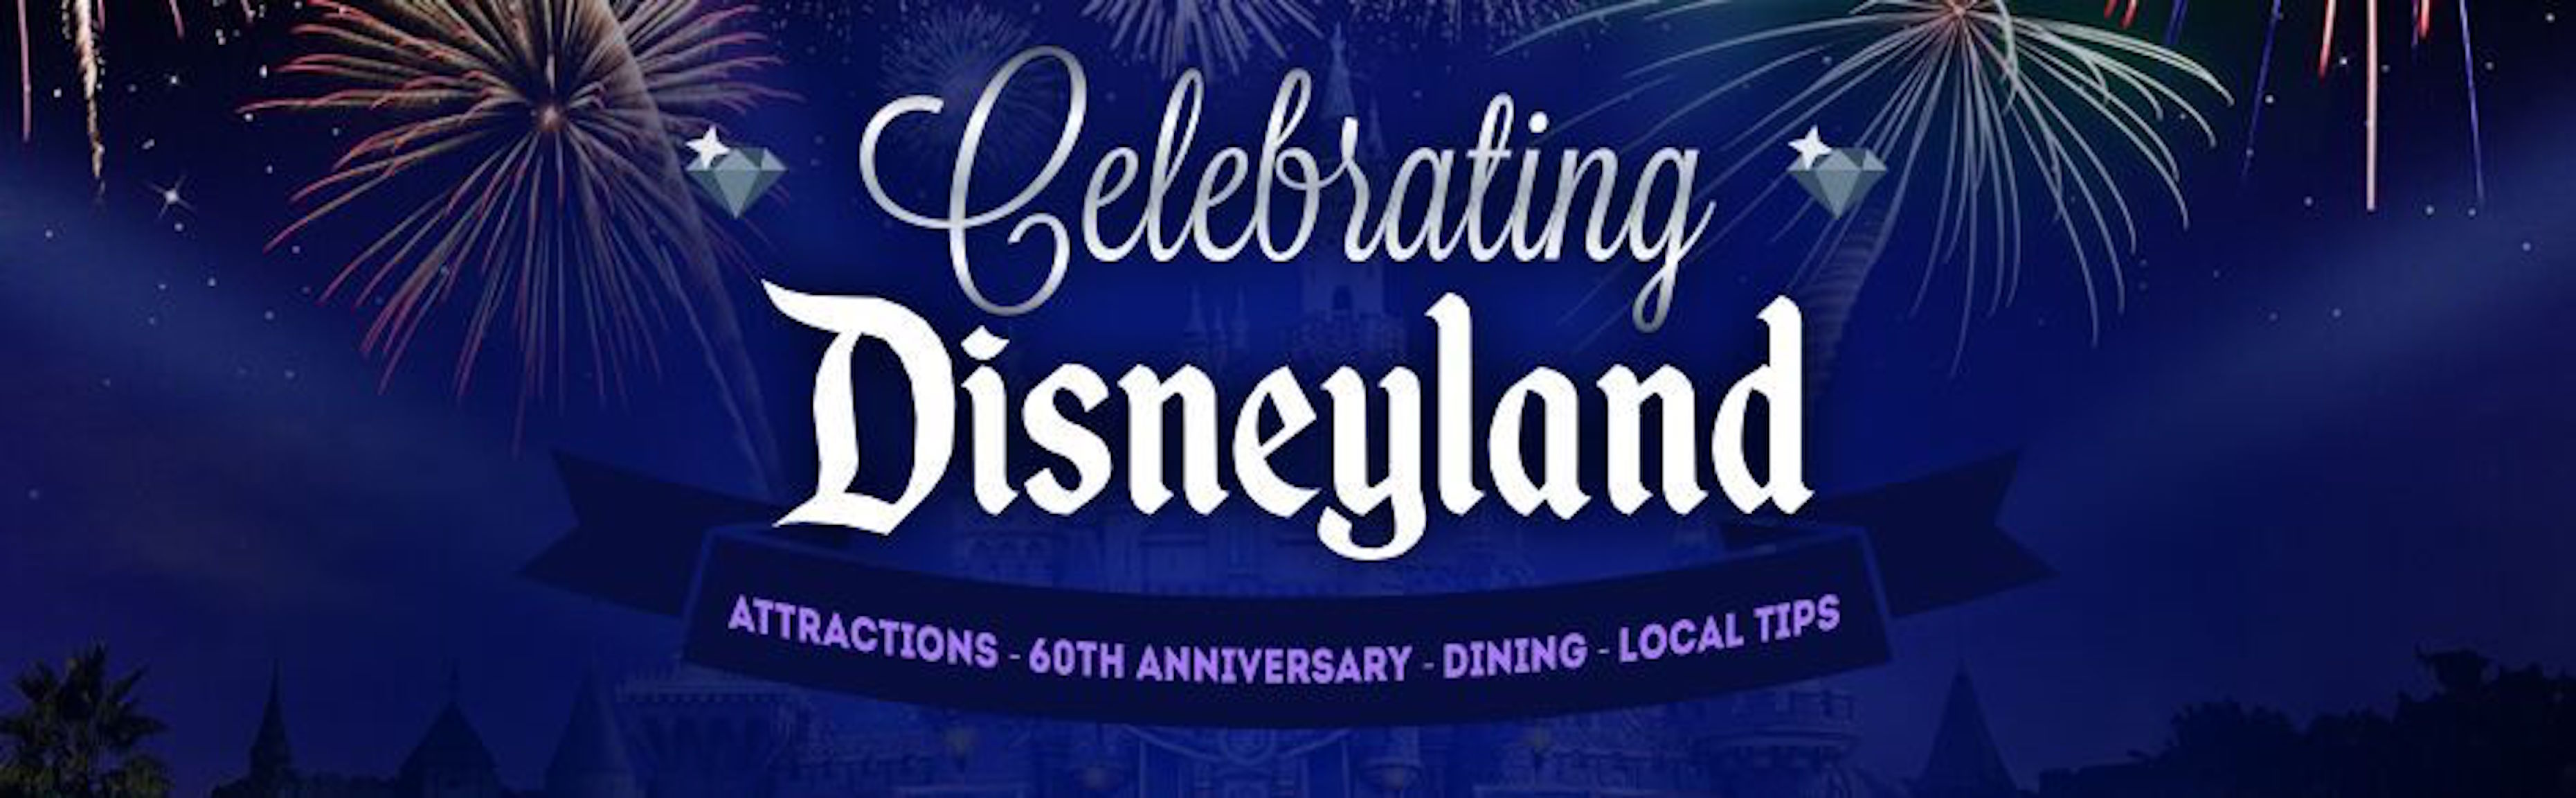 Celebrating Disneyland – 06/27/16 – Week 4 Trivia Contest & Show